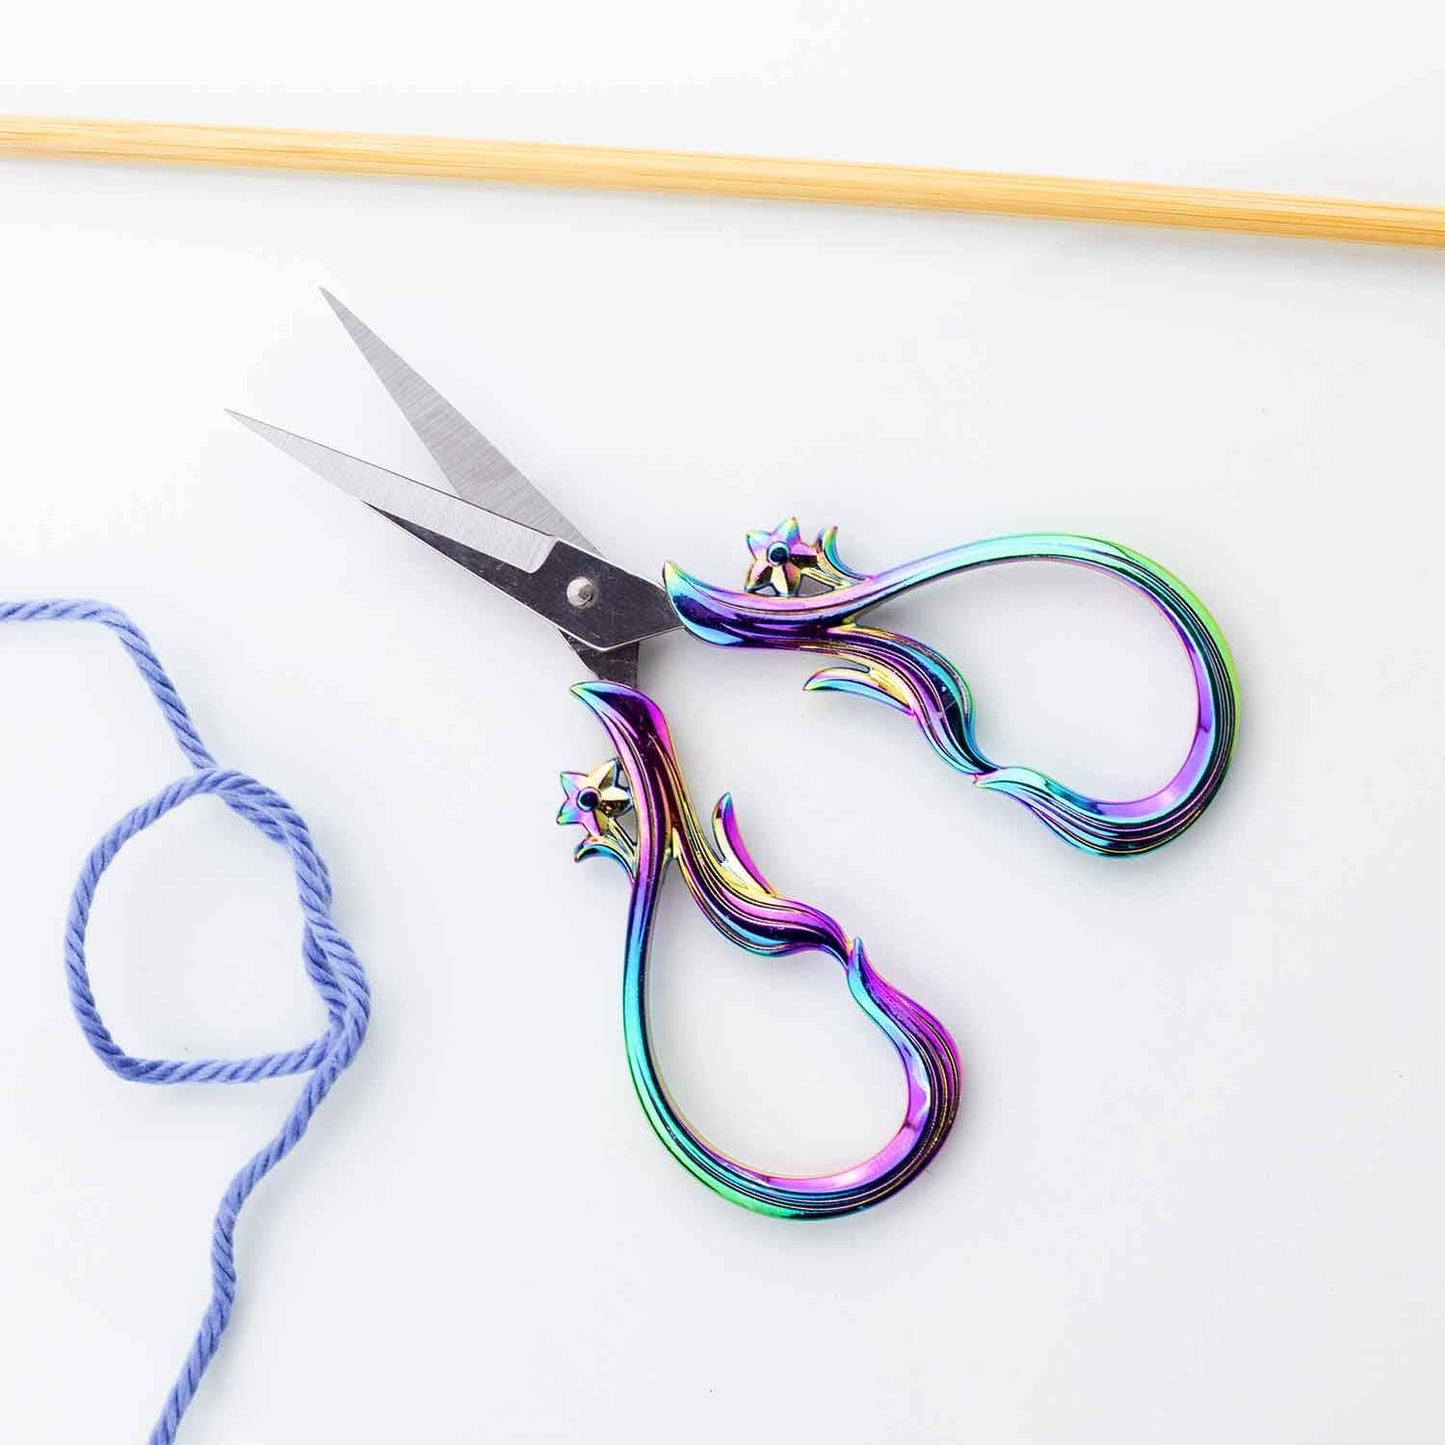 Twice Sheared Sheep Star dust Rainbow Embroidery Scissors Scissors